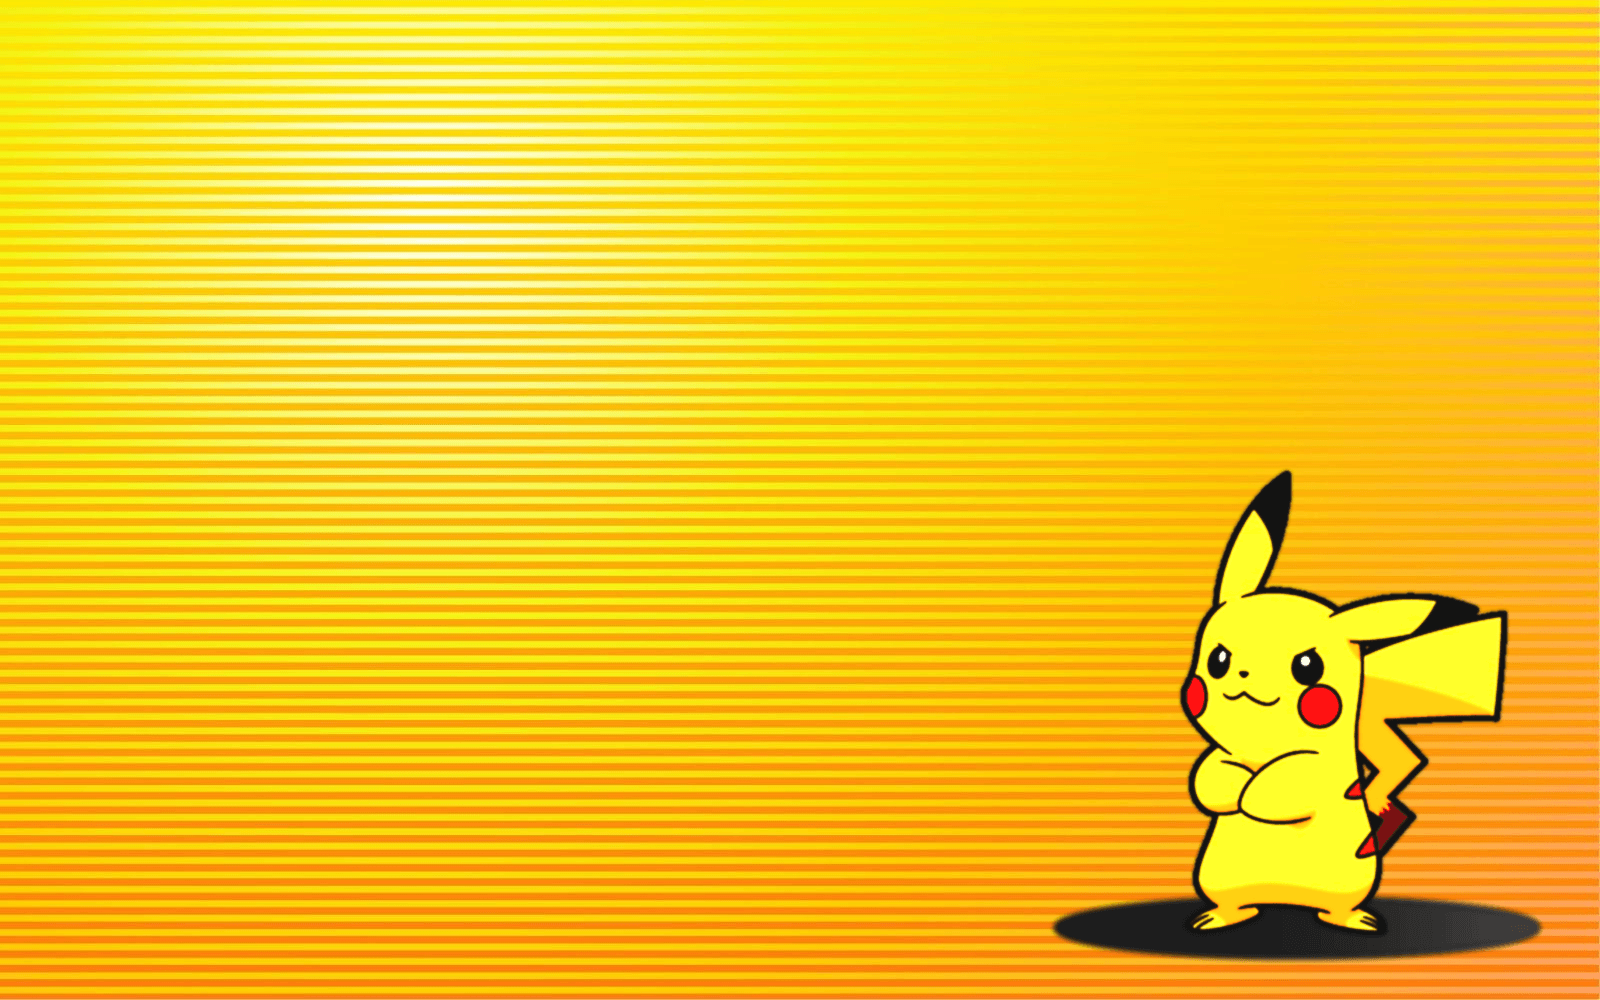 Pikachu Backgrounds Wallpaper Cave HD Wallpapers Download Free Images Wallpaper [wallpaper981.blogspot.com]